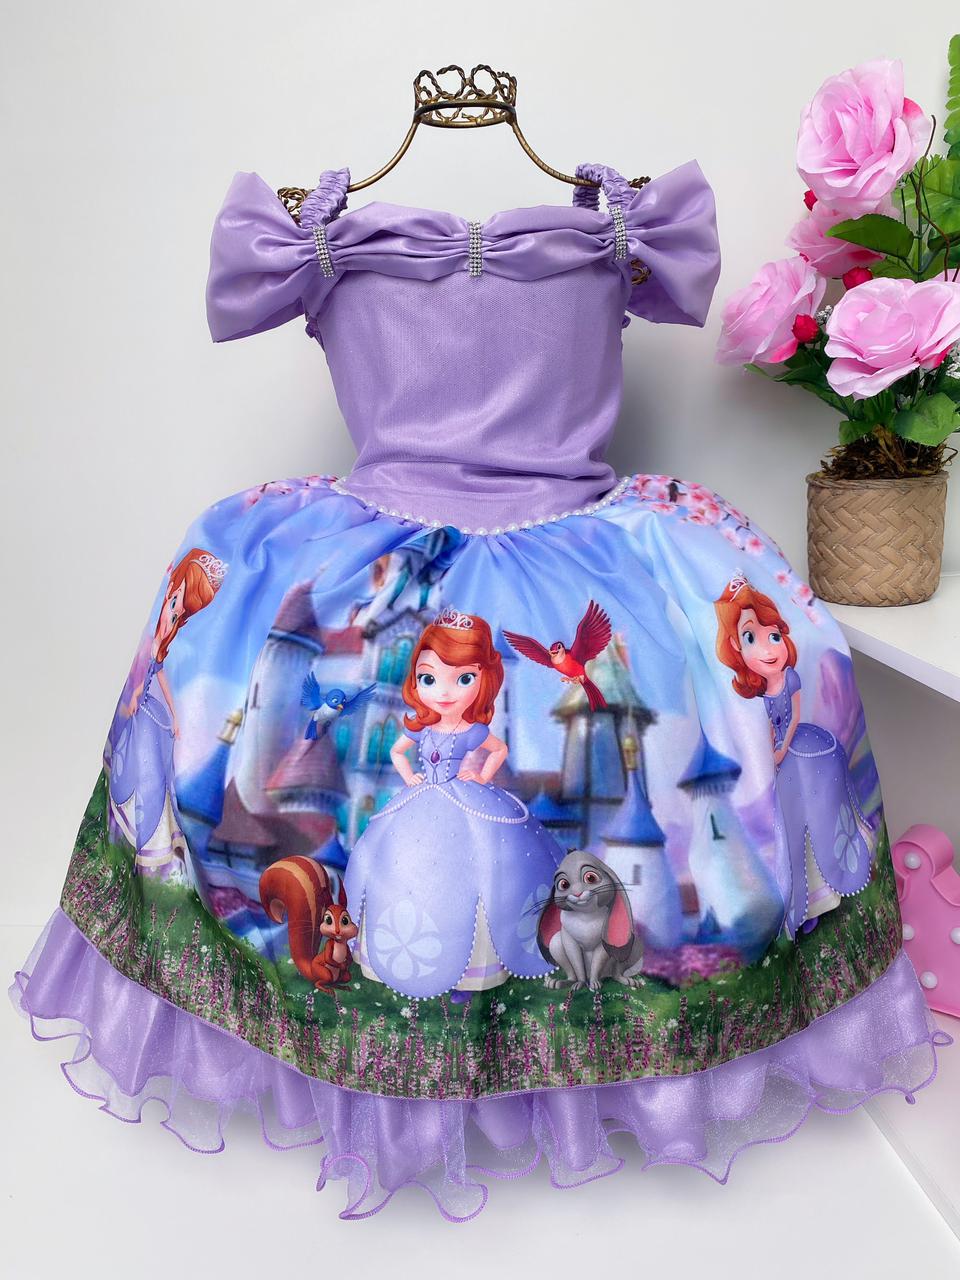 Fantasia Infantil Princesa Sofia Vestido Clássico Luxo - Shop Macrozao